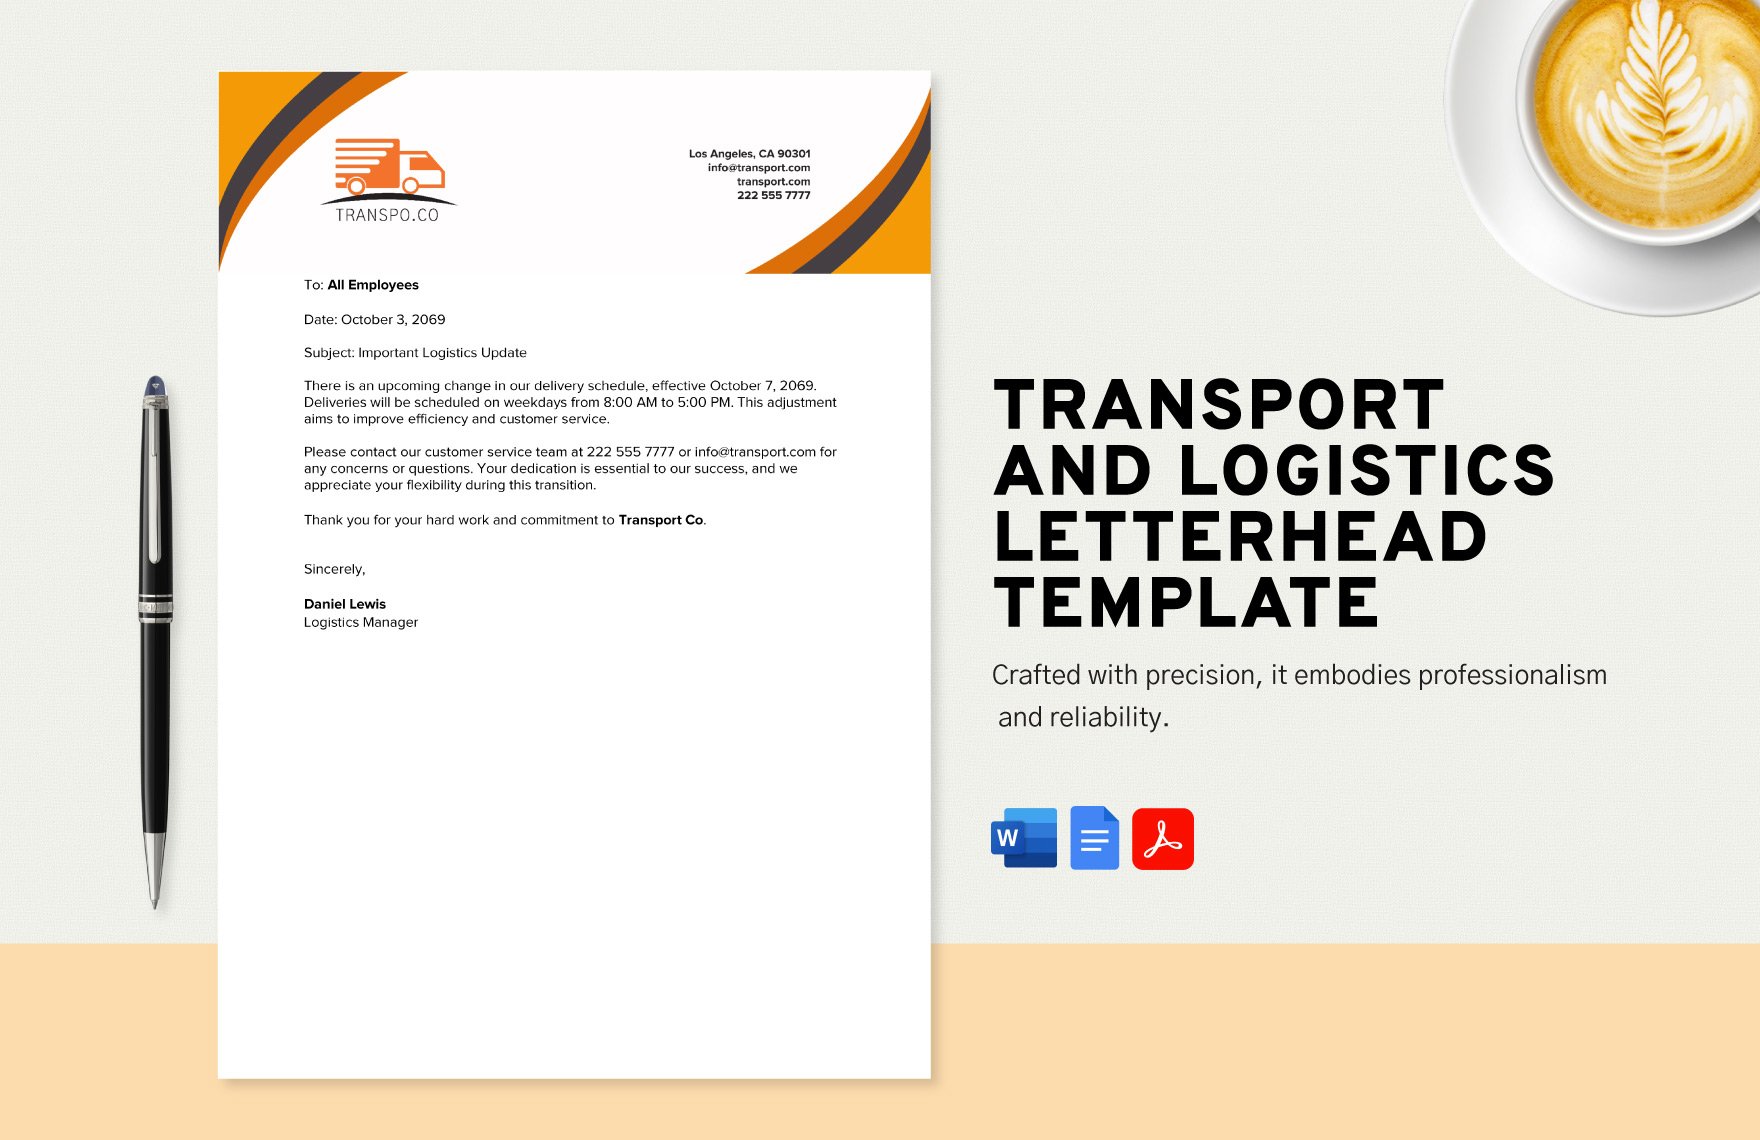 Transport and Logistics Letterhead Template